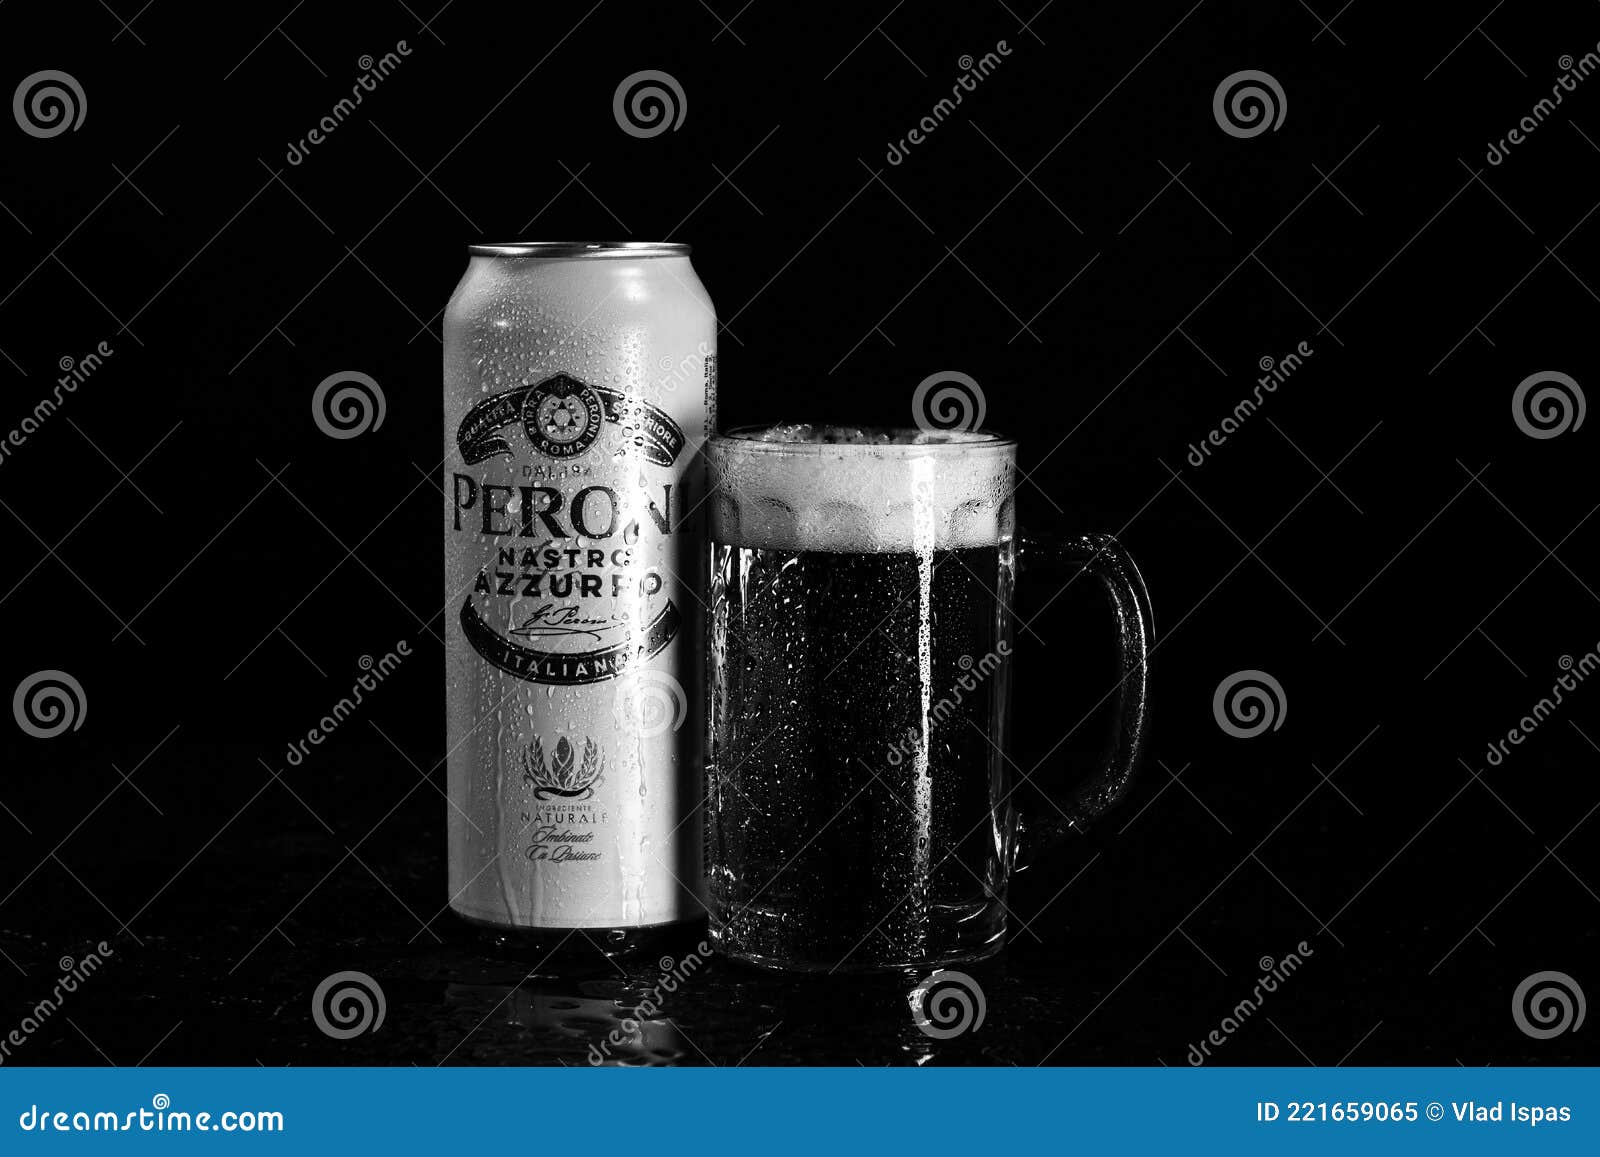 https://thumbs.dreamstime.com/z/can-peroni-nastro-azzurro-beer-glass-dark-background-illustrative-editorial-photo-shot-bucharest-romania-221659065.jpg